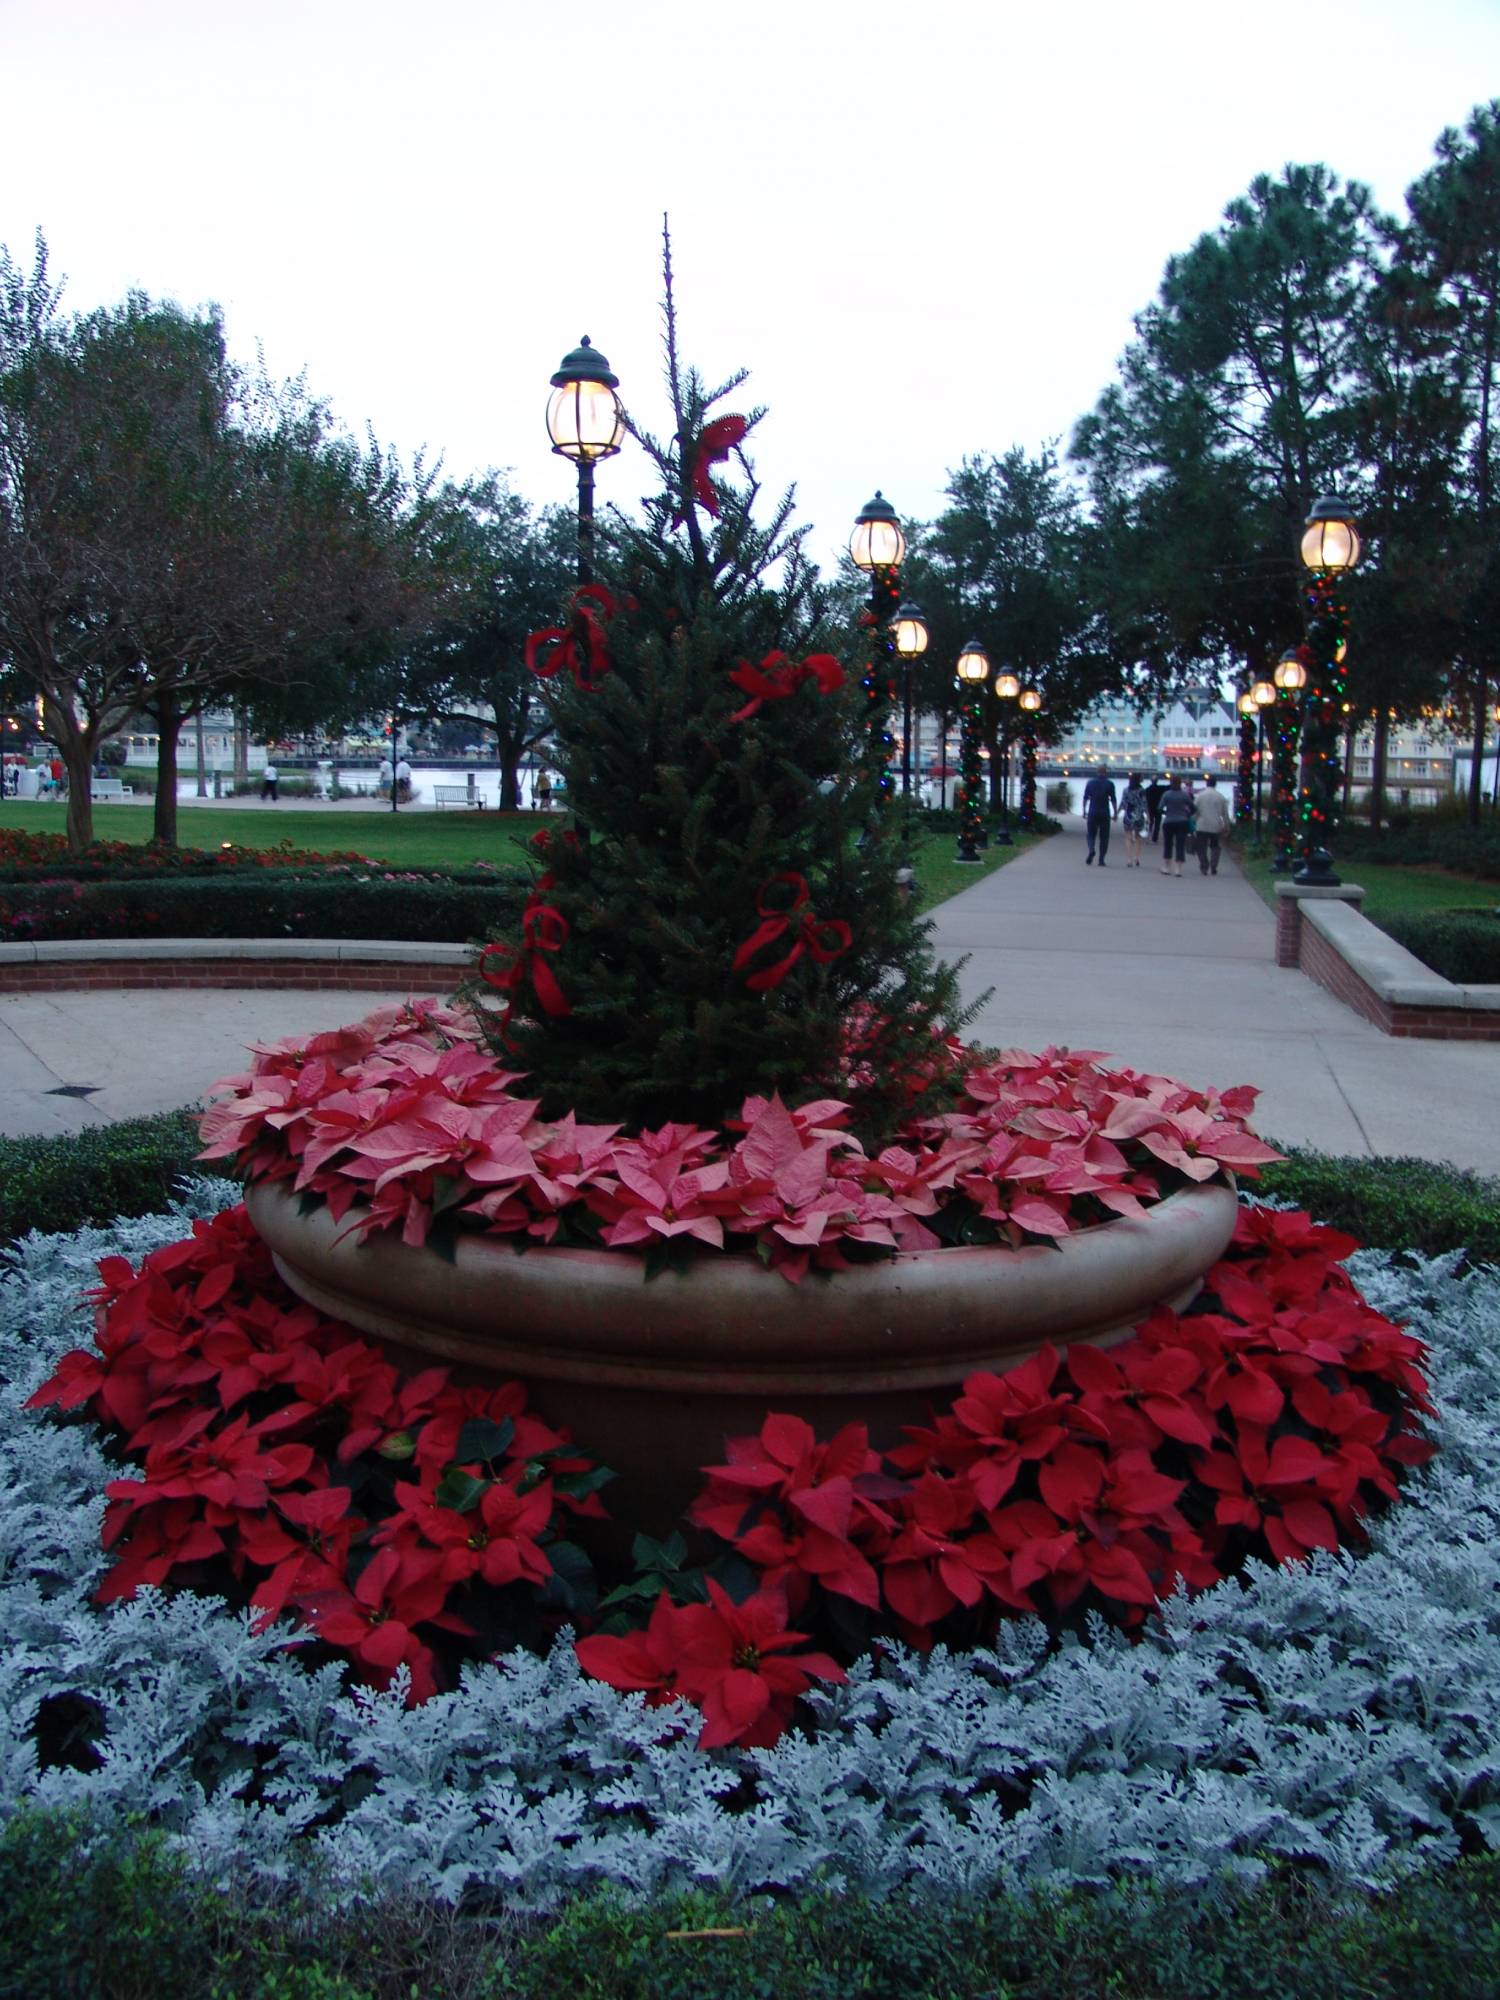 Celebrate the holiday season at Walt Disney World |PassPorter.com